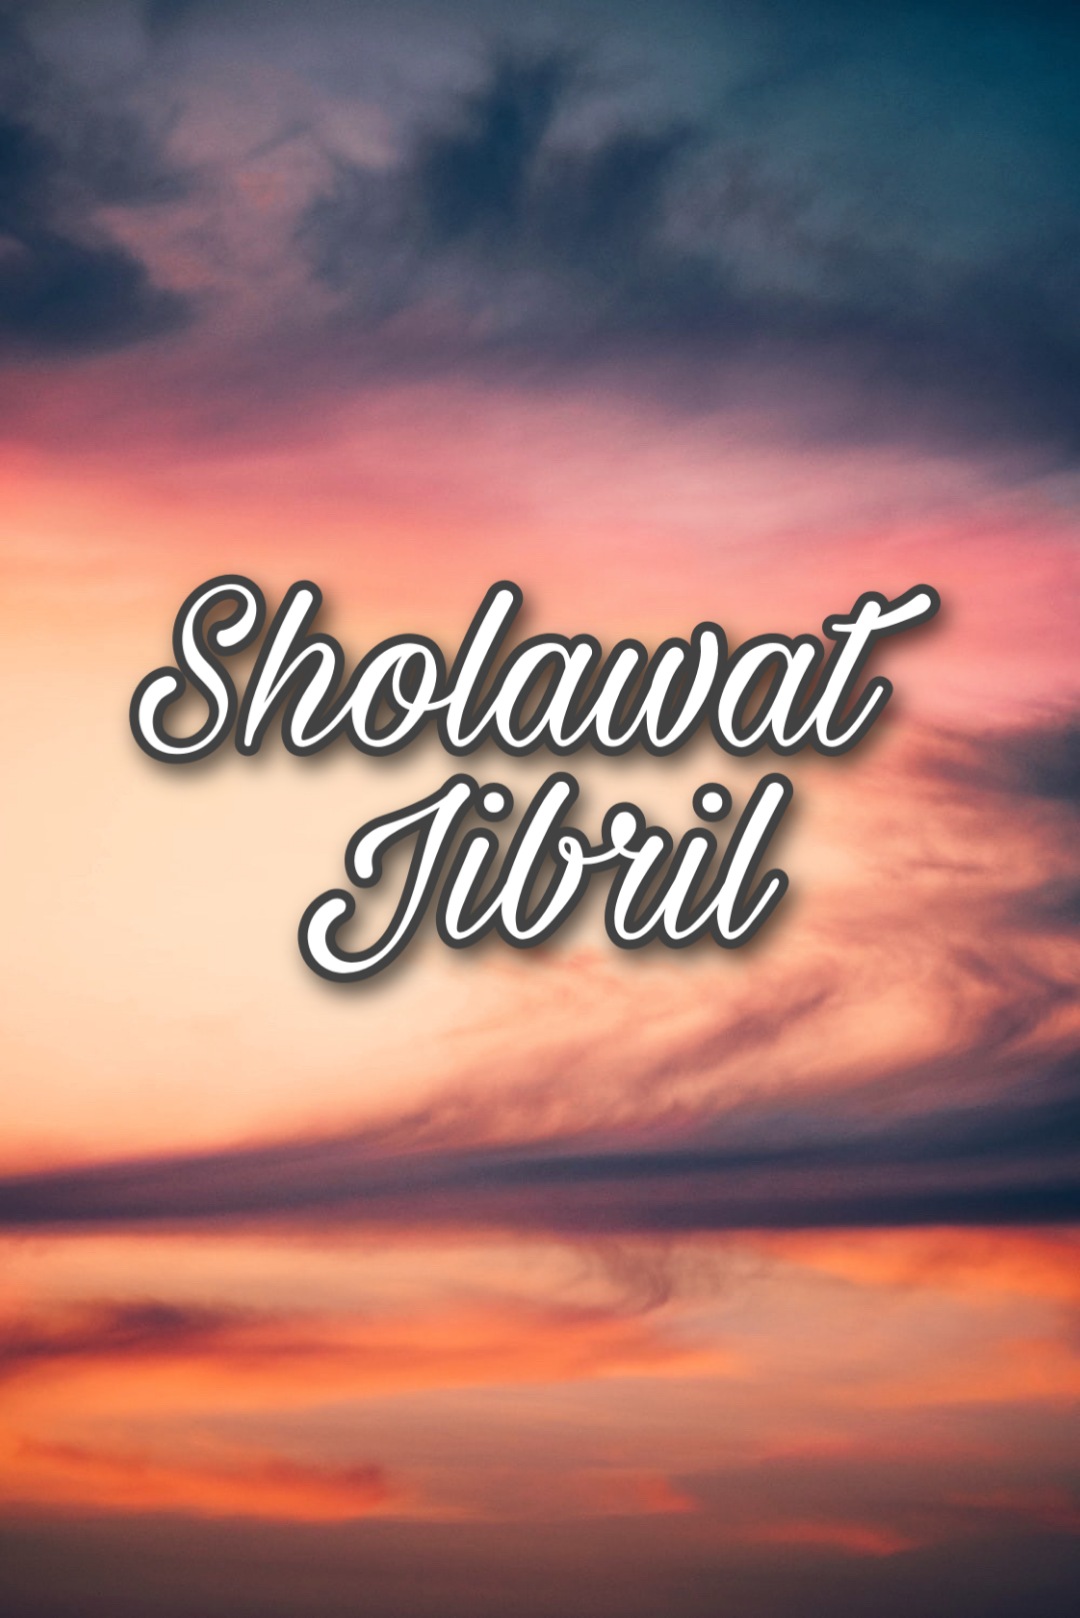 Sholawat Jibril – My Journey